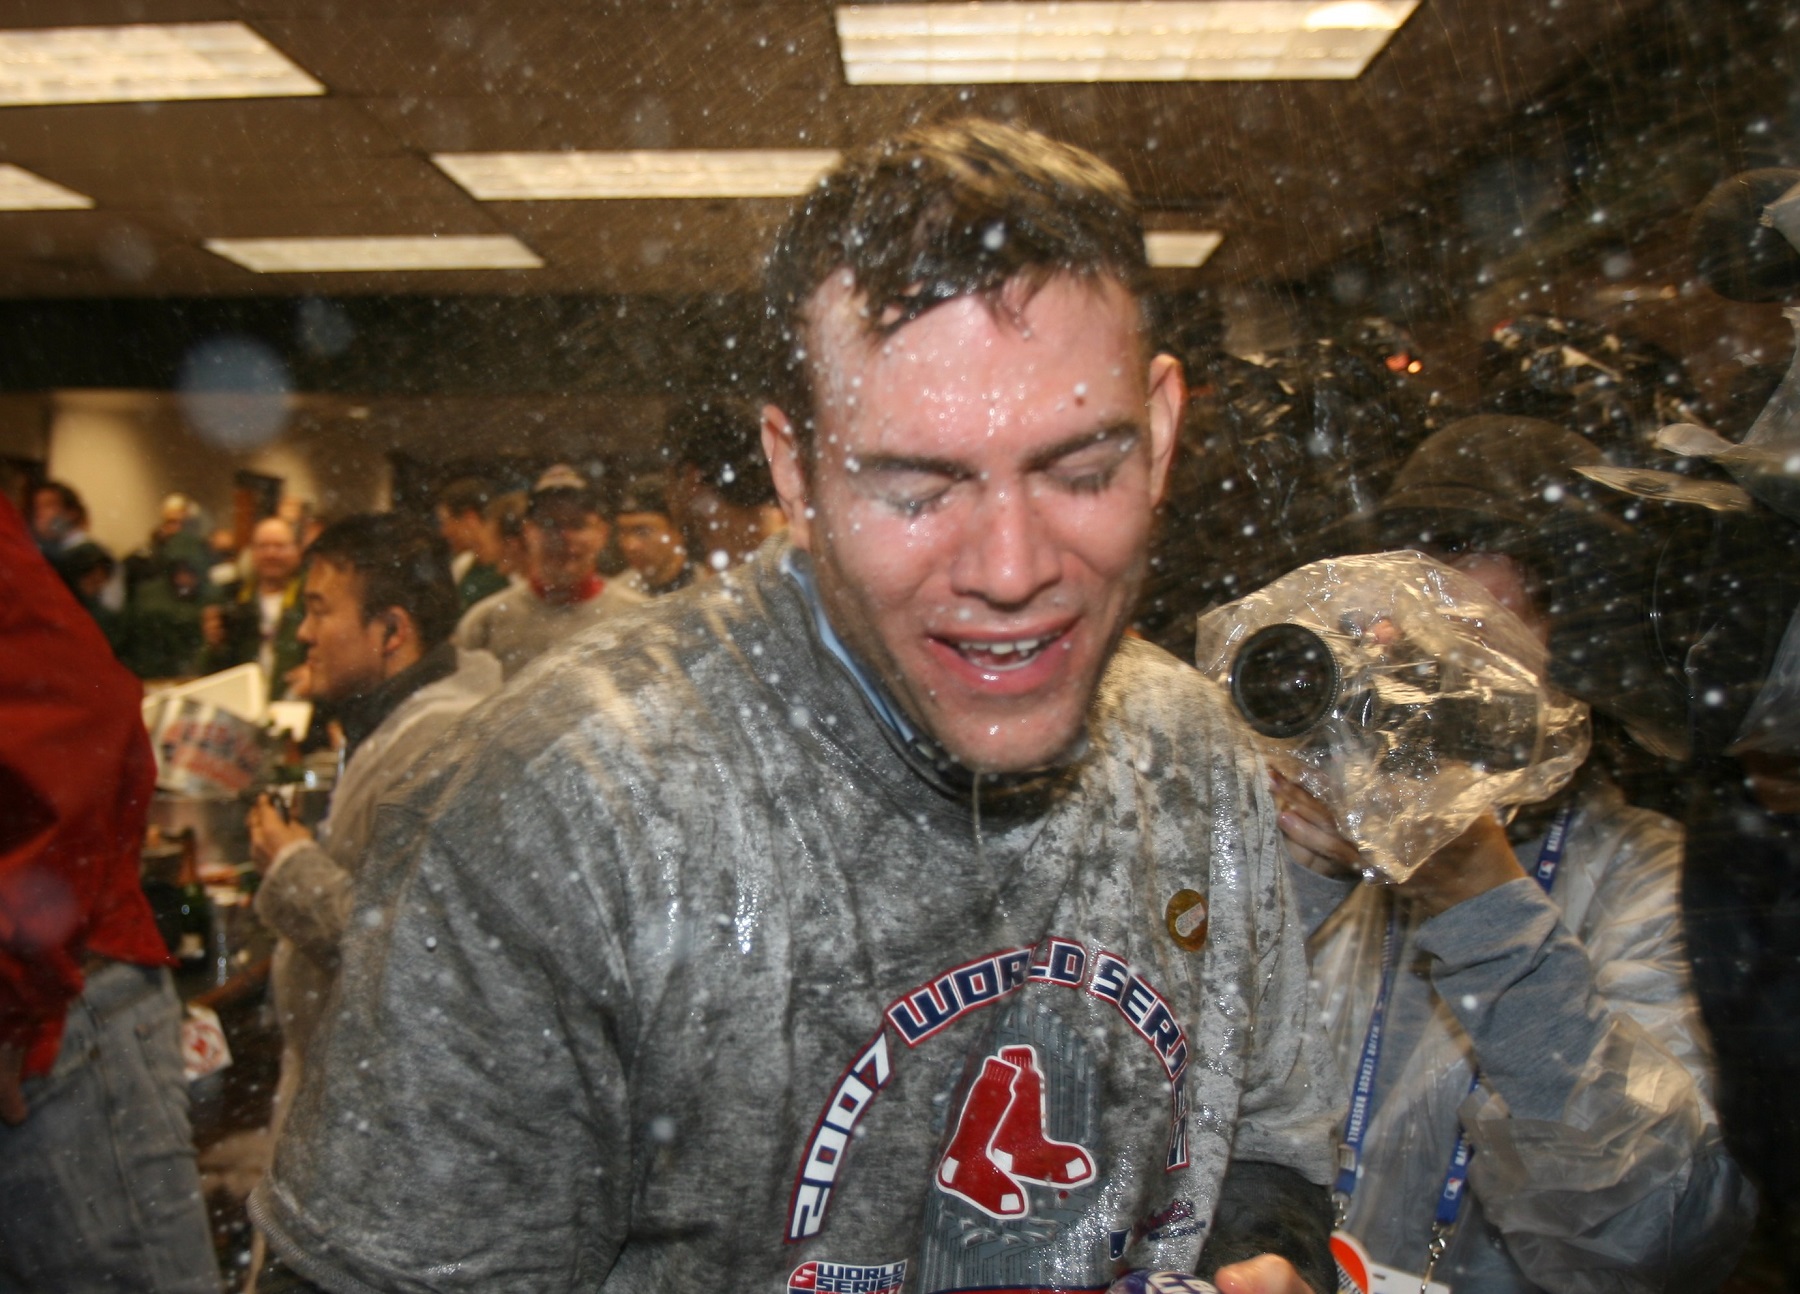 MLB champagne celebrations